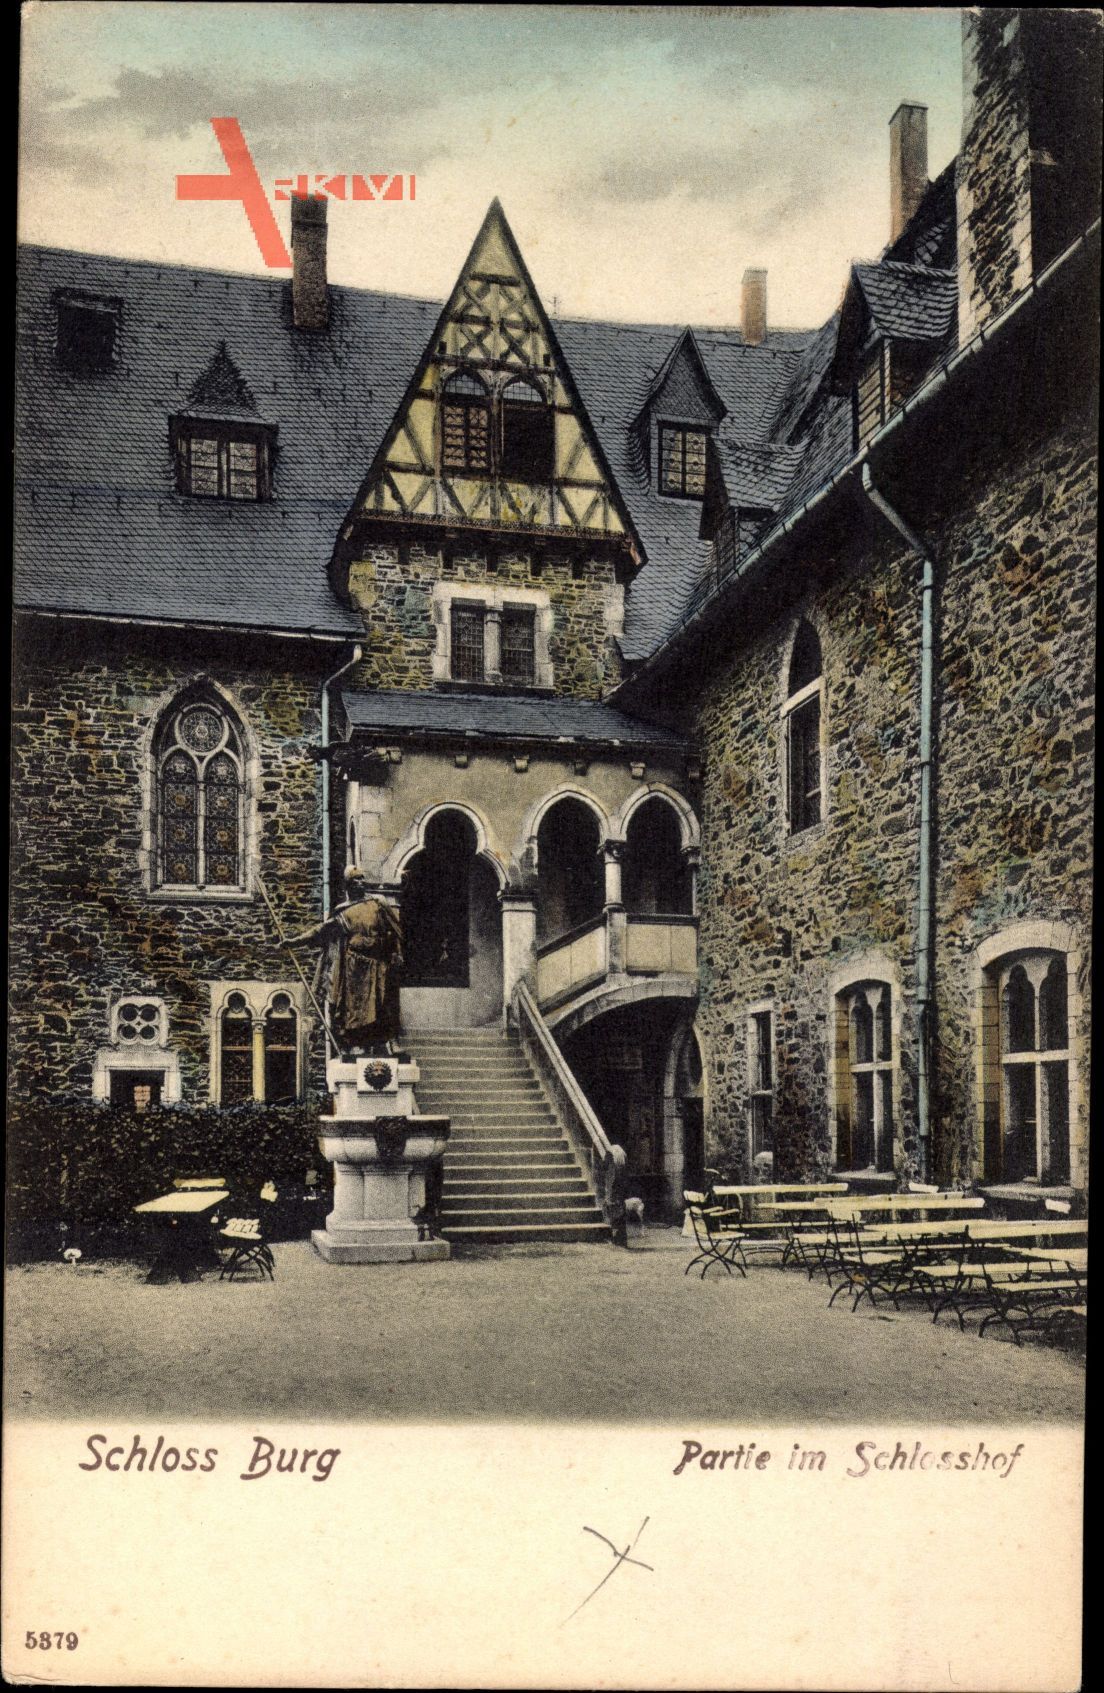 Burg a.d. Wupper Solingen, Partie im Schlosshof, Treppe